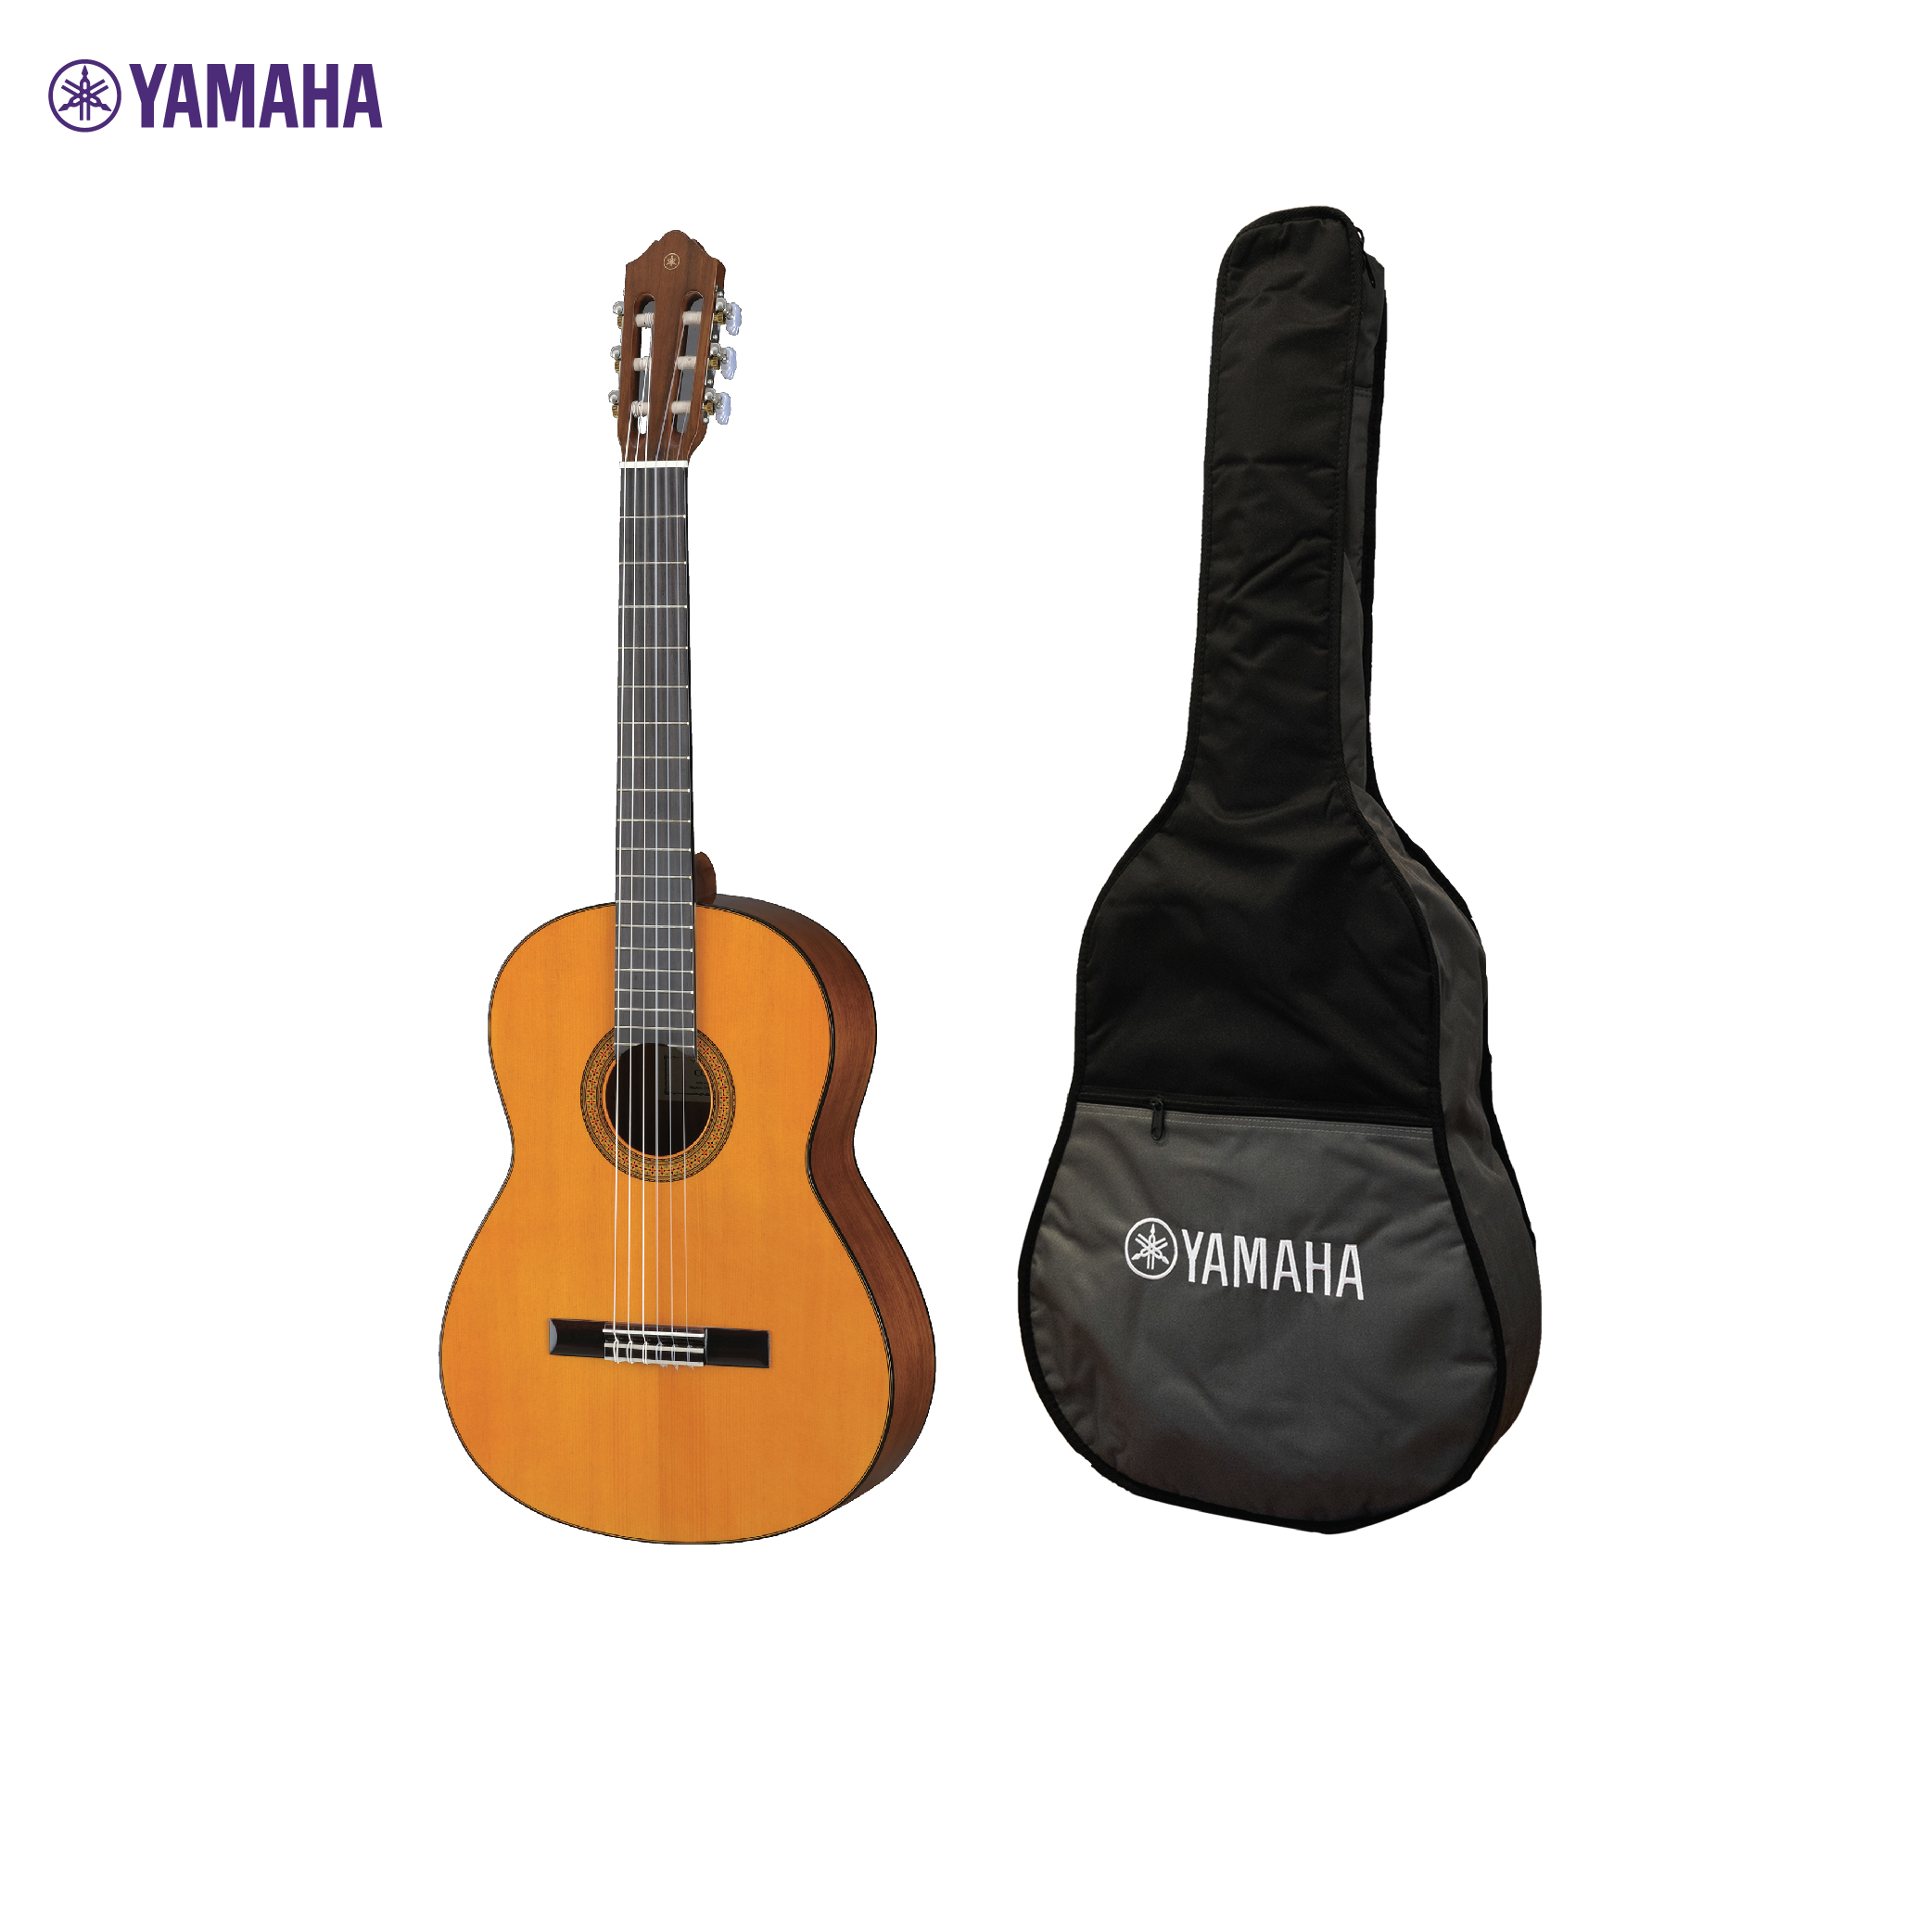 YAMAHA CG102 Classical Guitar กีตาร์คลาสสิกยามาฮ่า รุ่น CG102 + Standard Guitar Bag กระเป๋ากีตาร์รุ่นสแตนดาร์ด